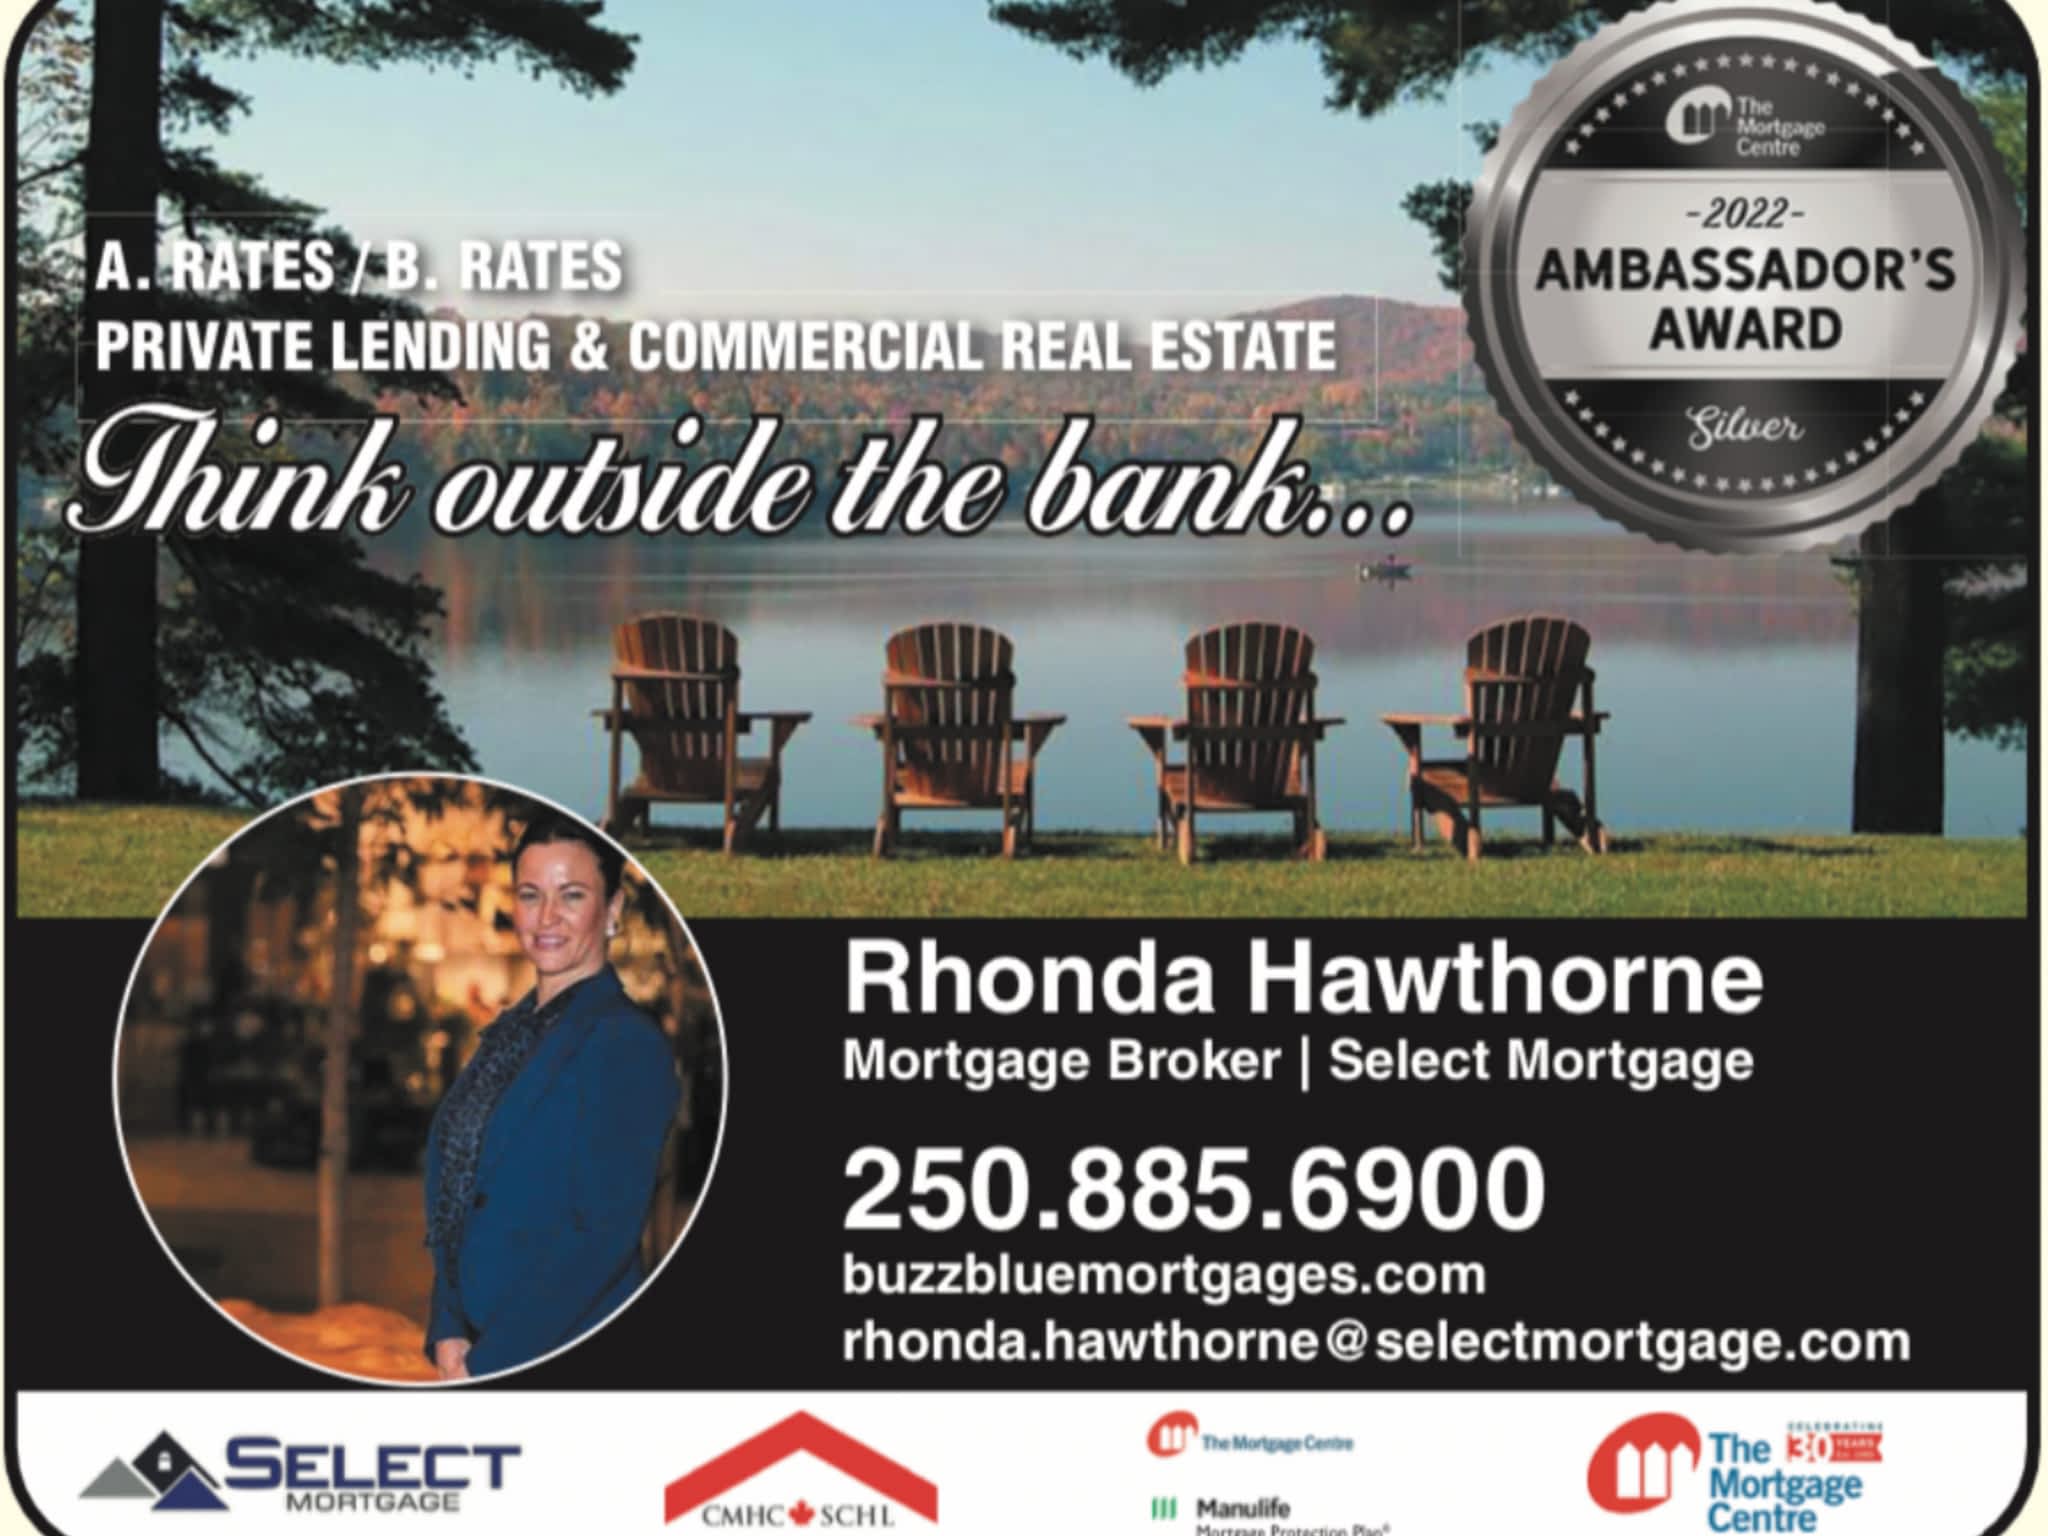 photo Rhonda Hawthorne Mortgage Broker Select Mortgage